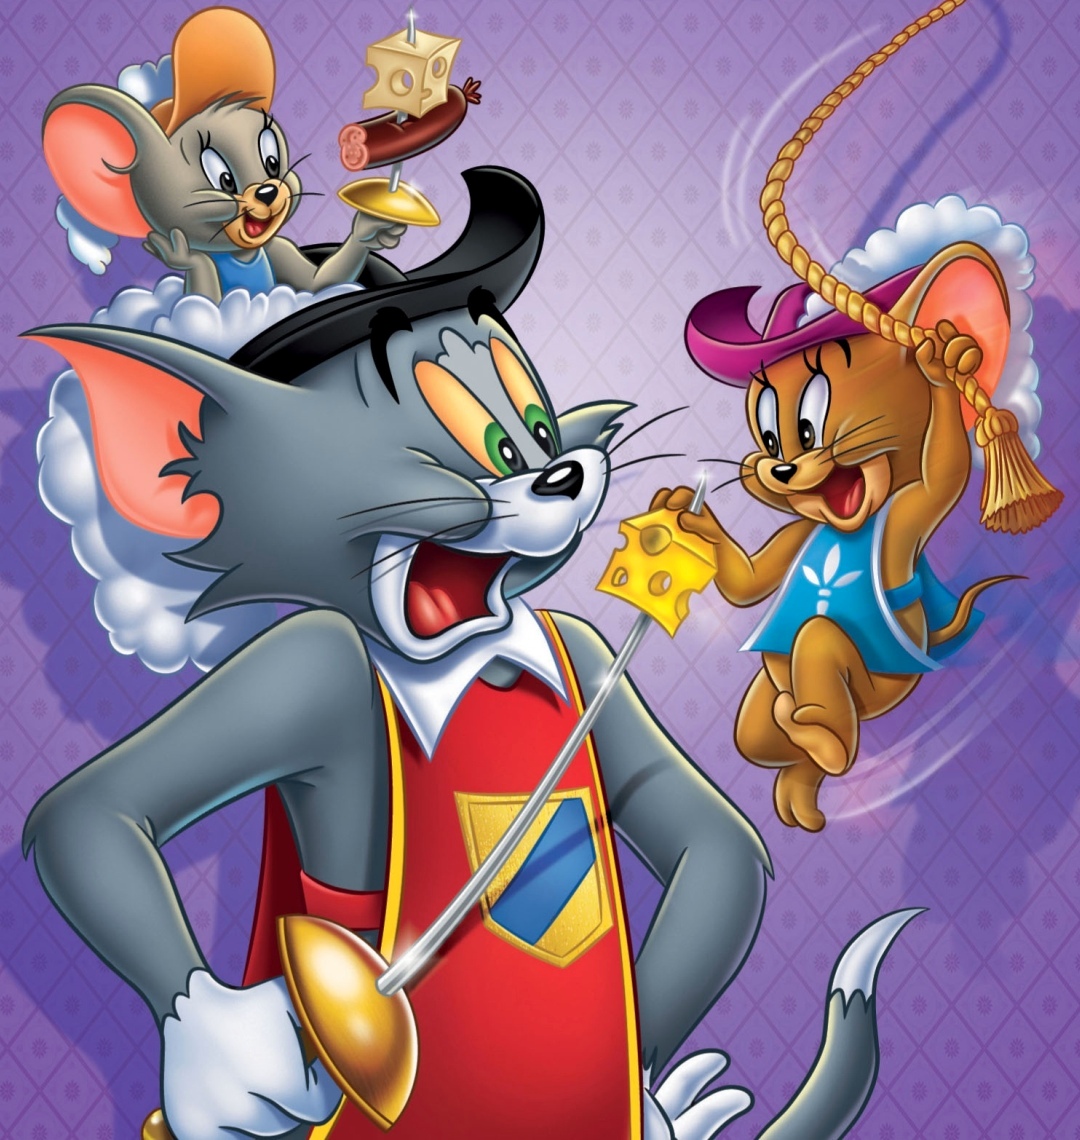 Tom jerry 2. Том и Джерри мушкетеры. Том и Джерри Дисней. Том и Джерри (Tom and Jerry) 1940.